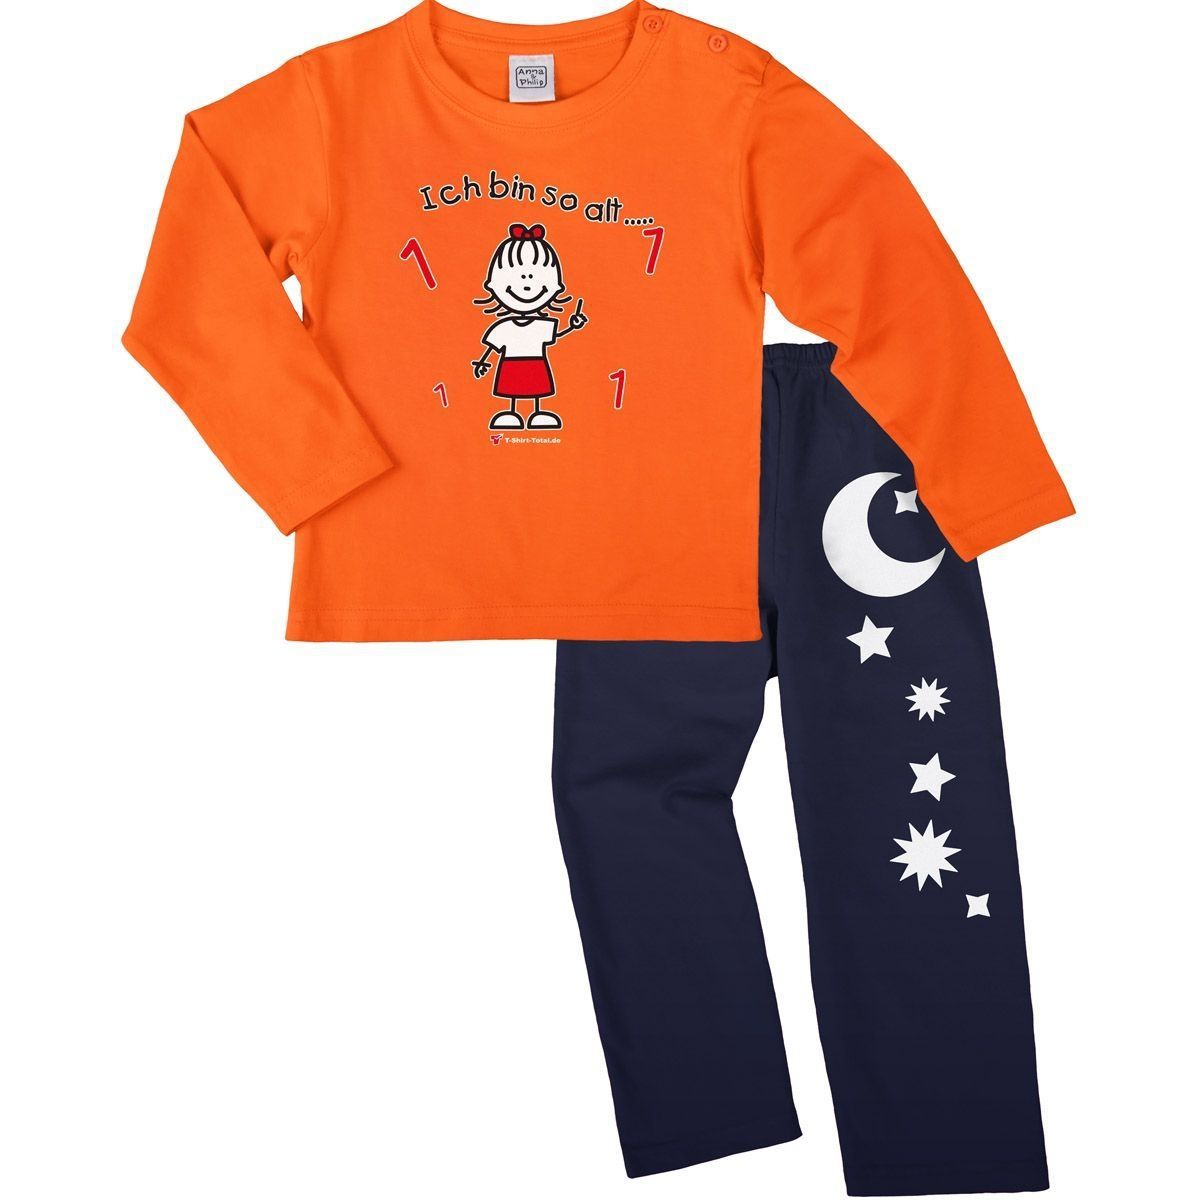 Mädchen so alt 1 Pyjama Set orange / navy 92